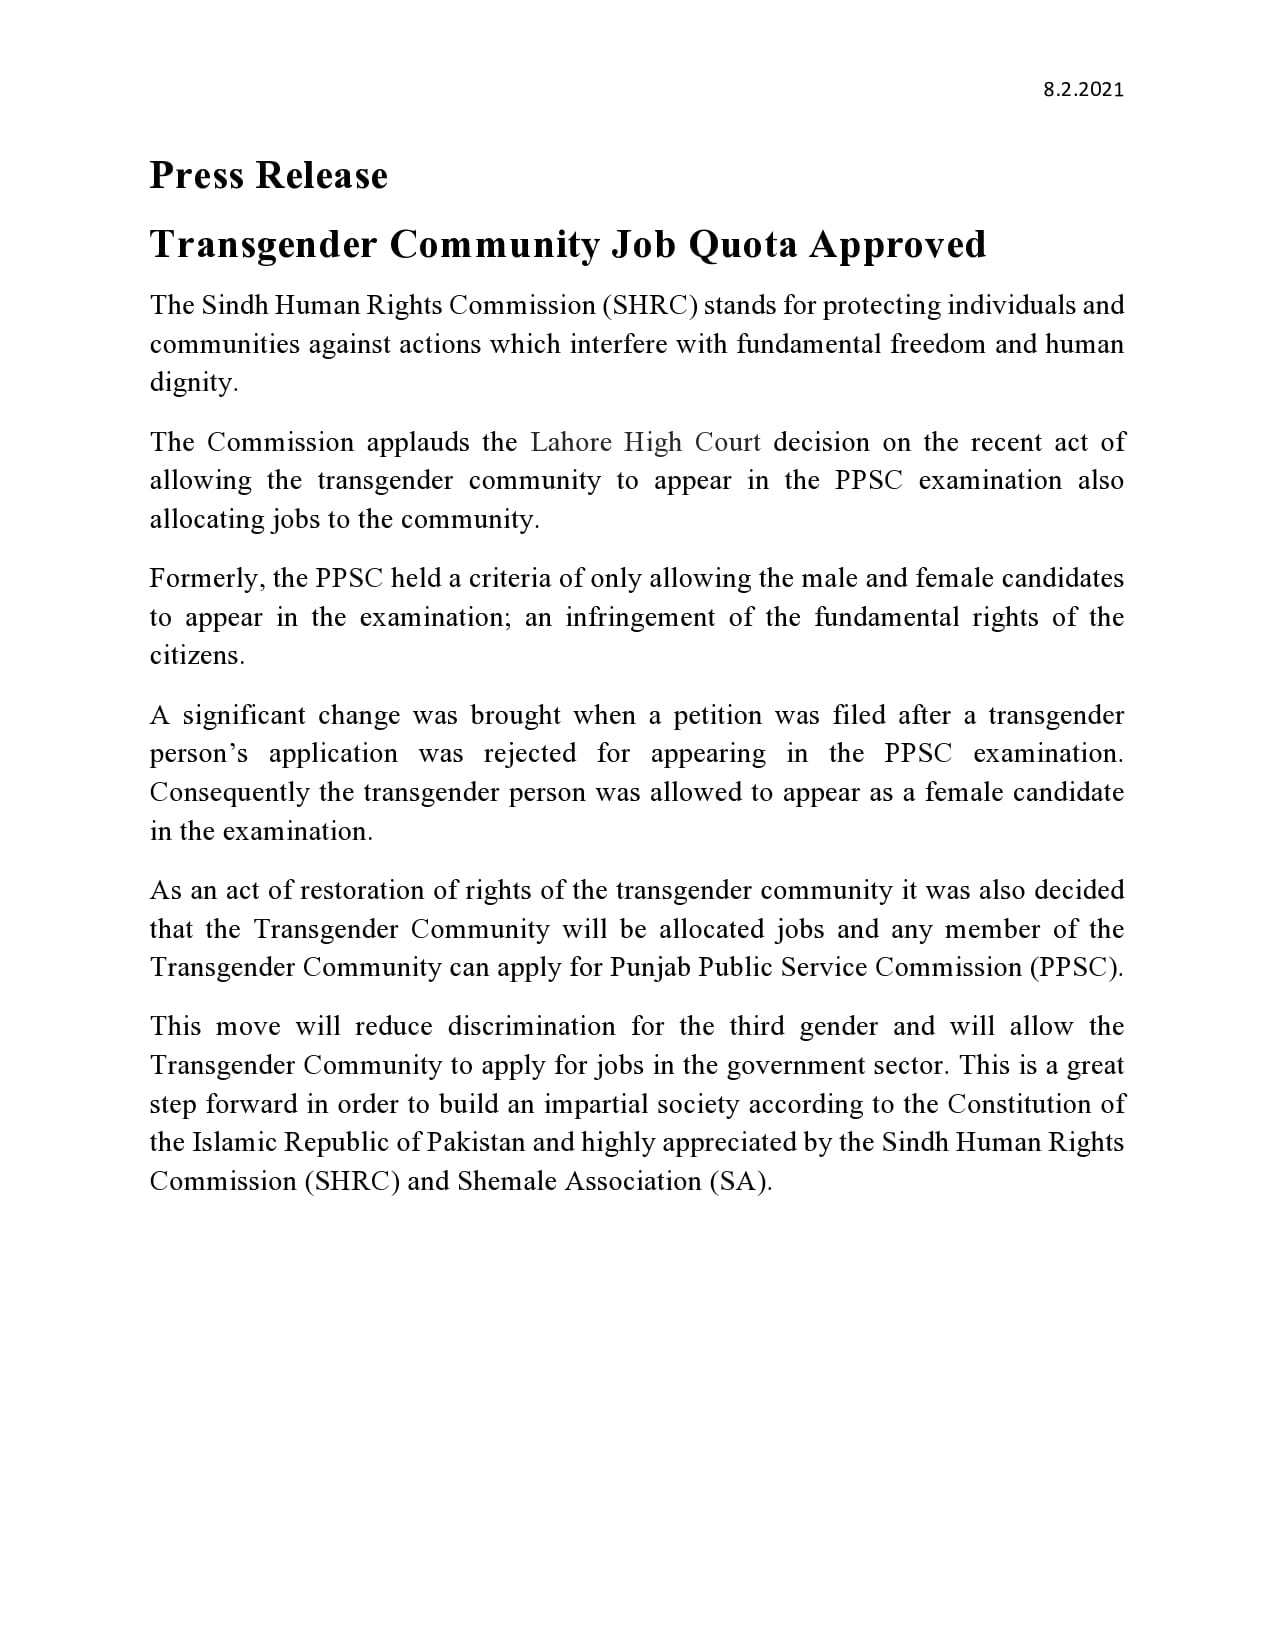 Transgender Community Job Quota Approved